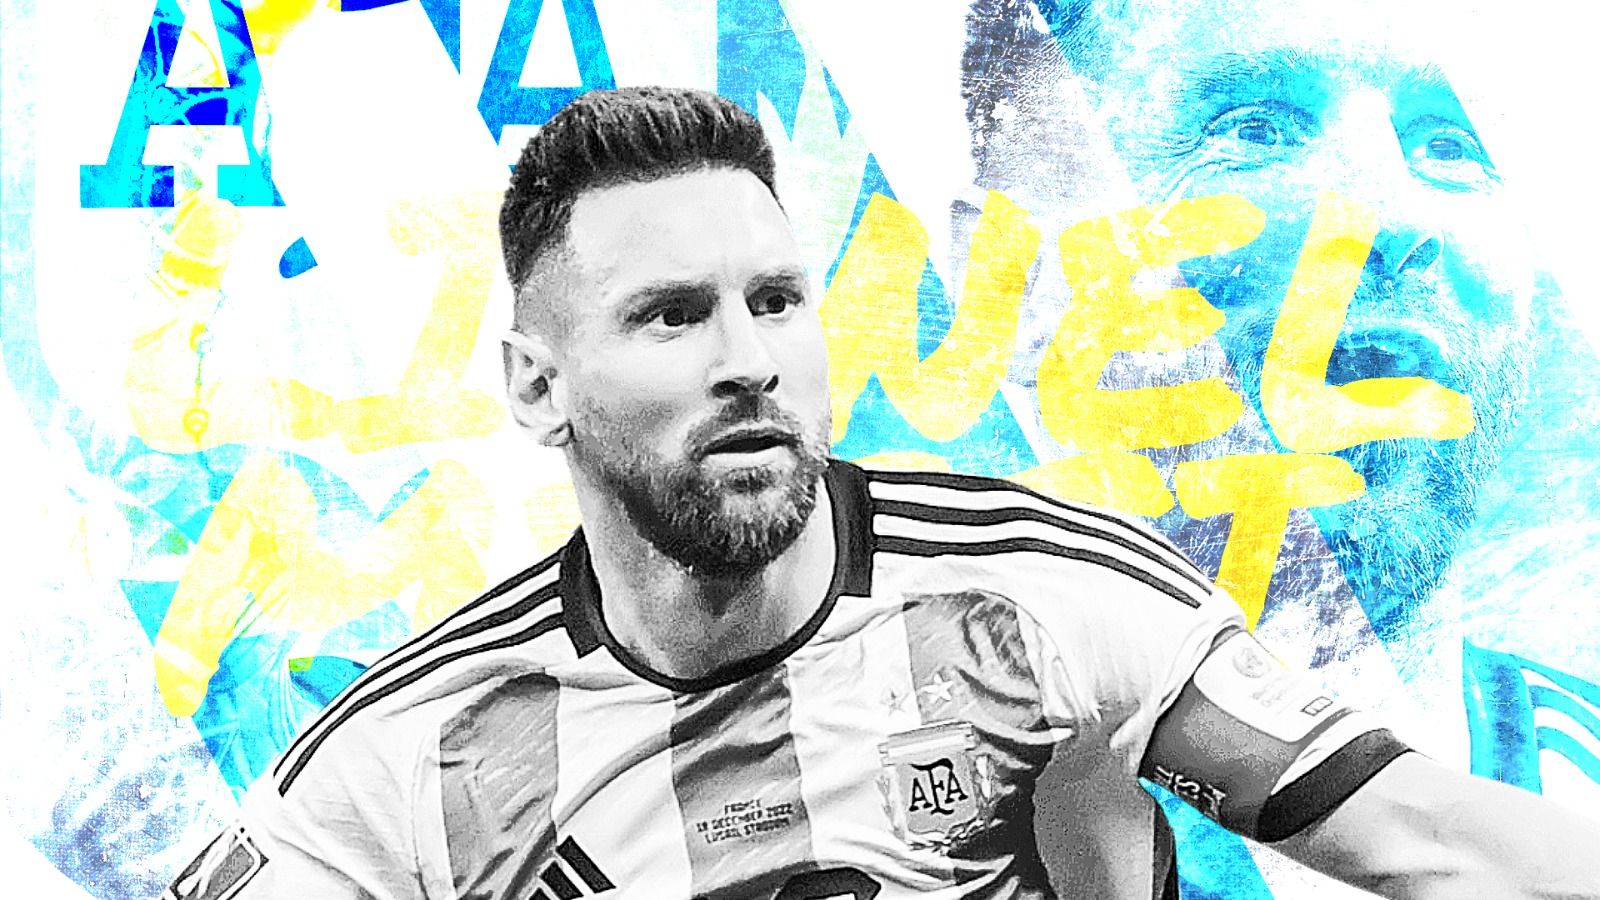 VIDEO: AFA Ucapkan Selamat Ulang Tahun kepada Lionel Messi